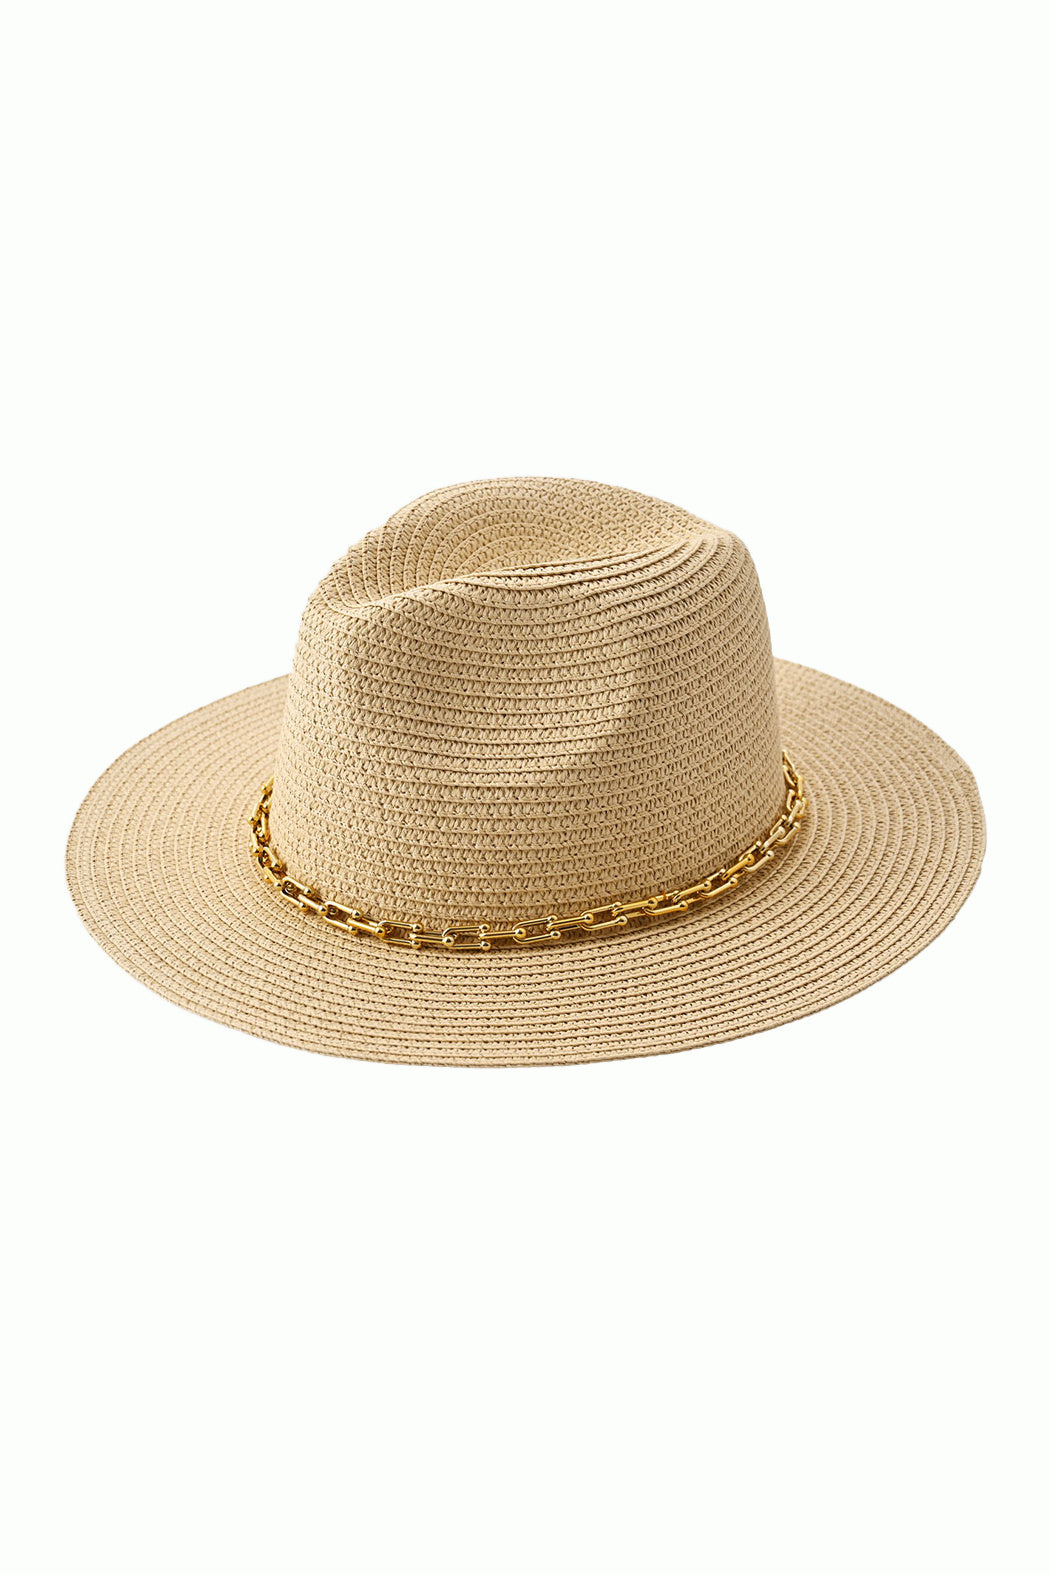 Chained Straw Panama Hat